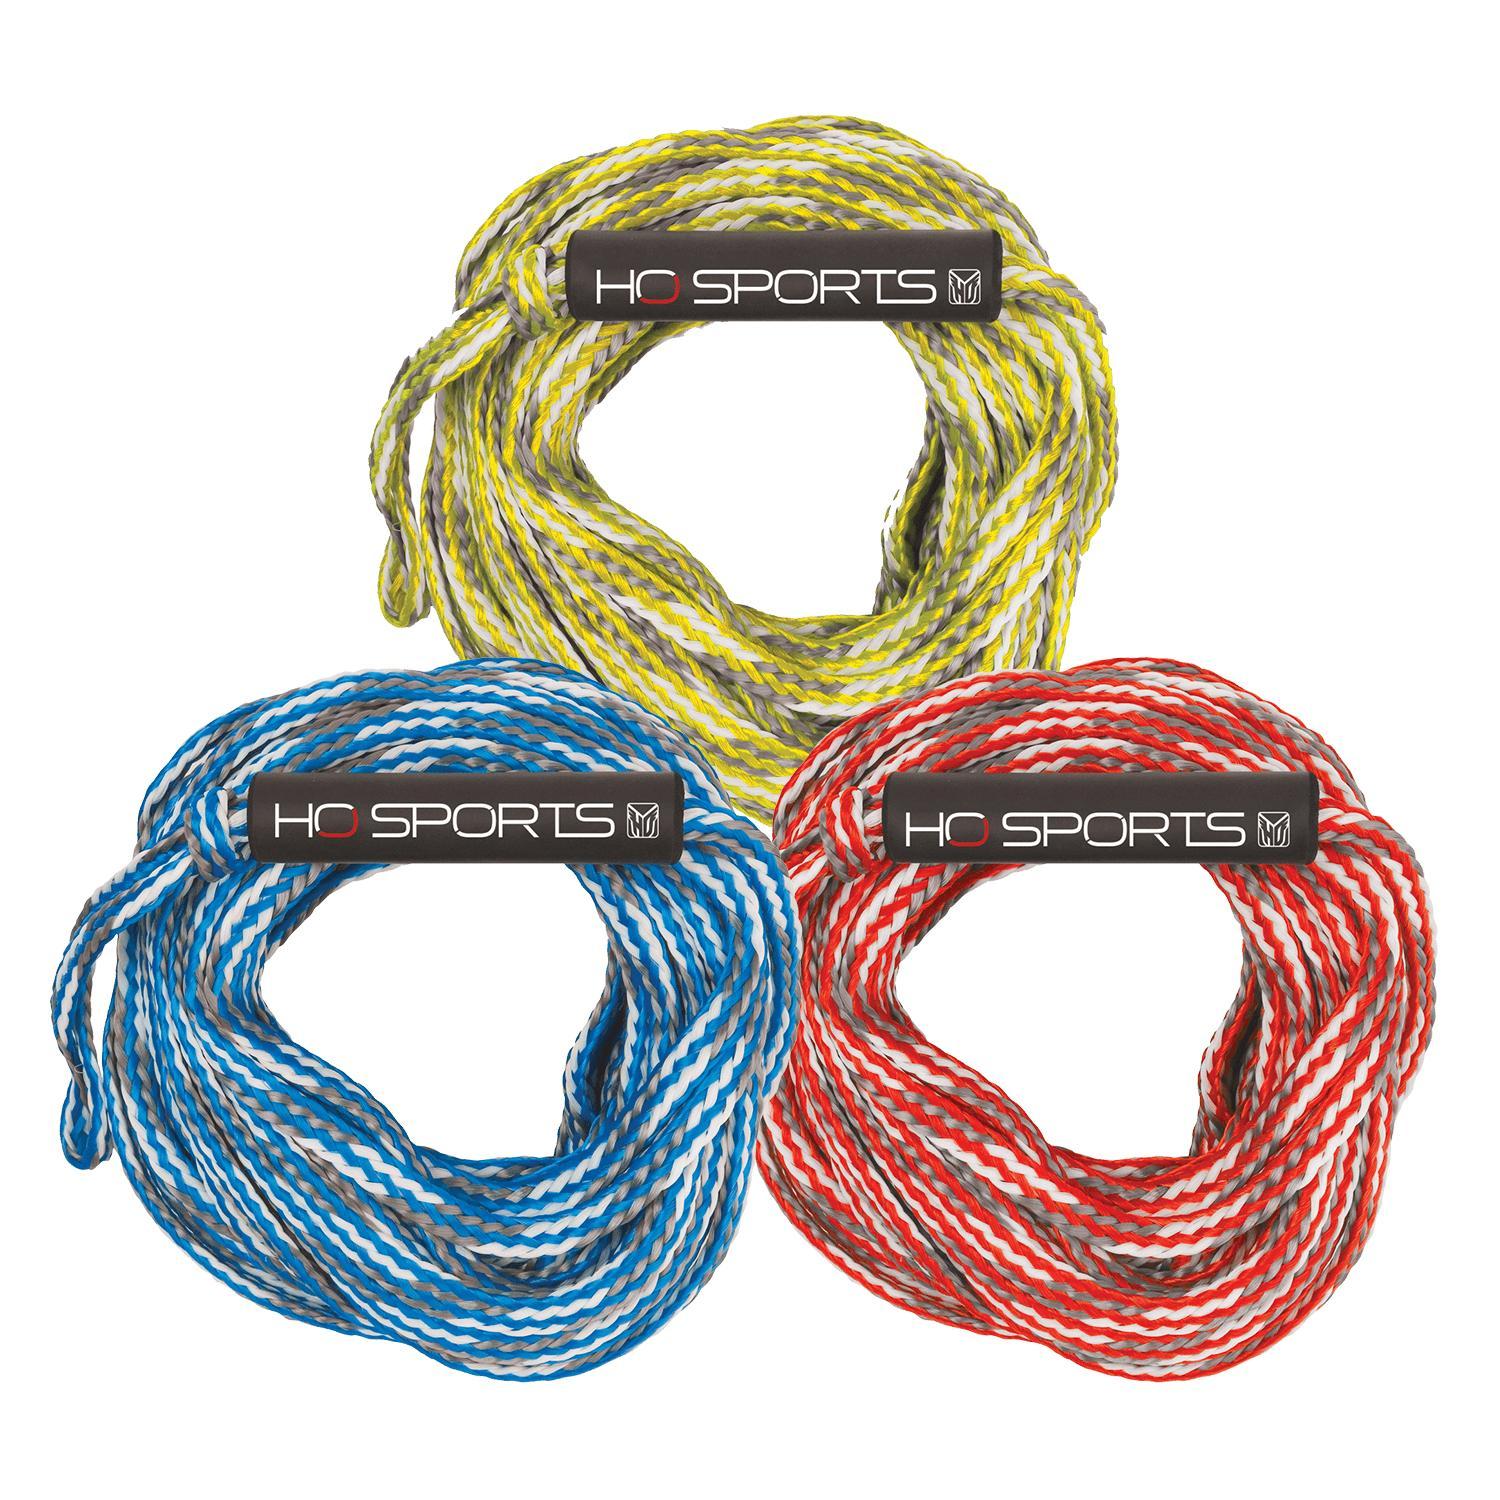  Ho Sports 2k Tube Rope